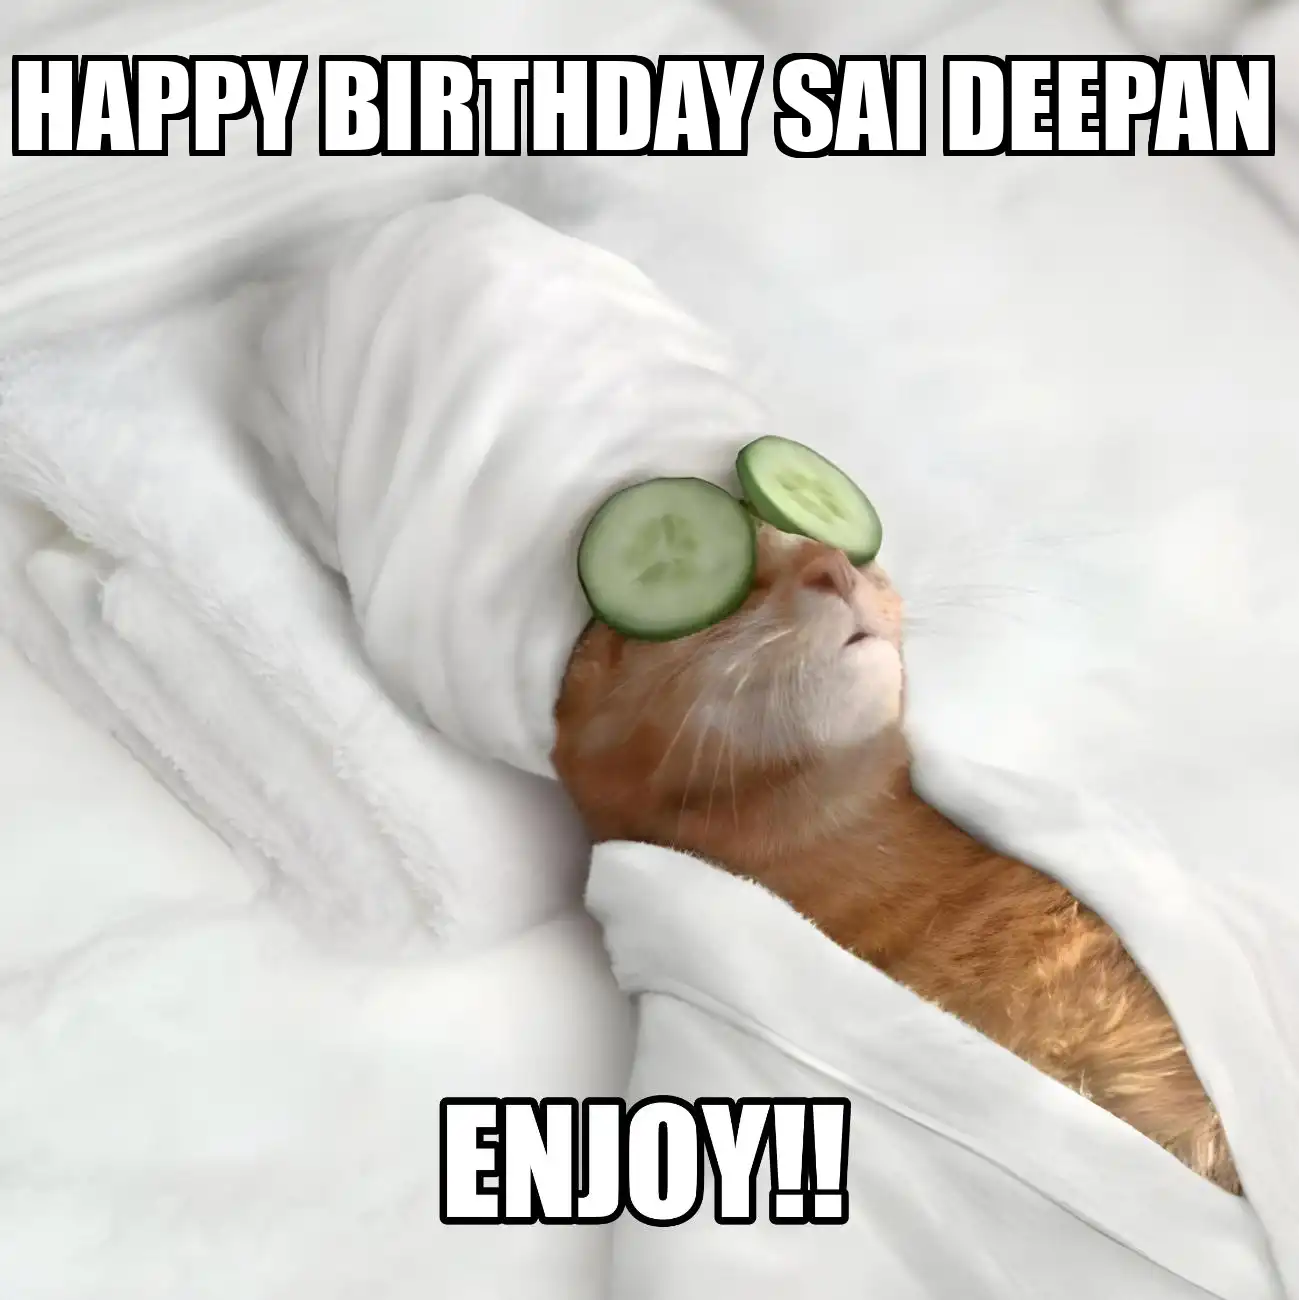 Happy Birthday Sai deepan Enjoy Cat Meme